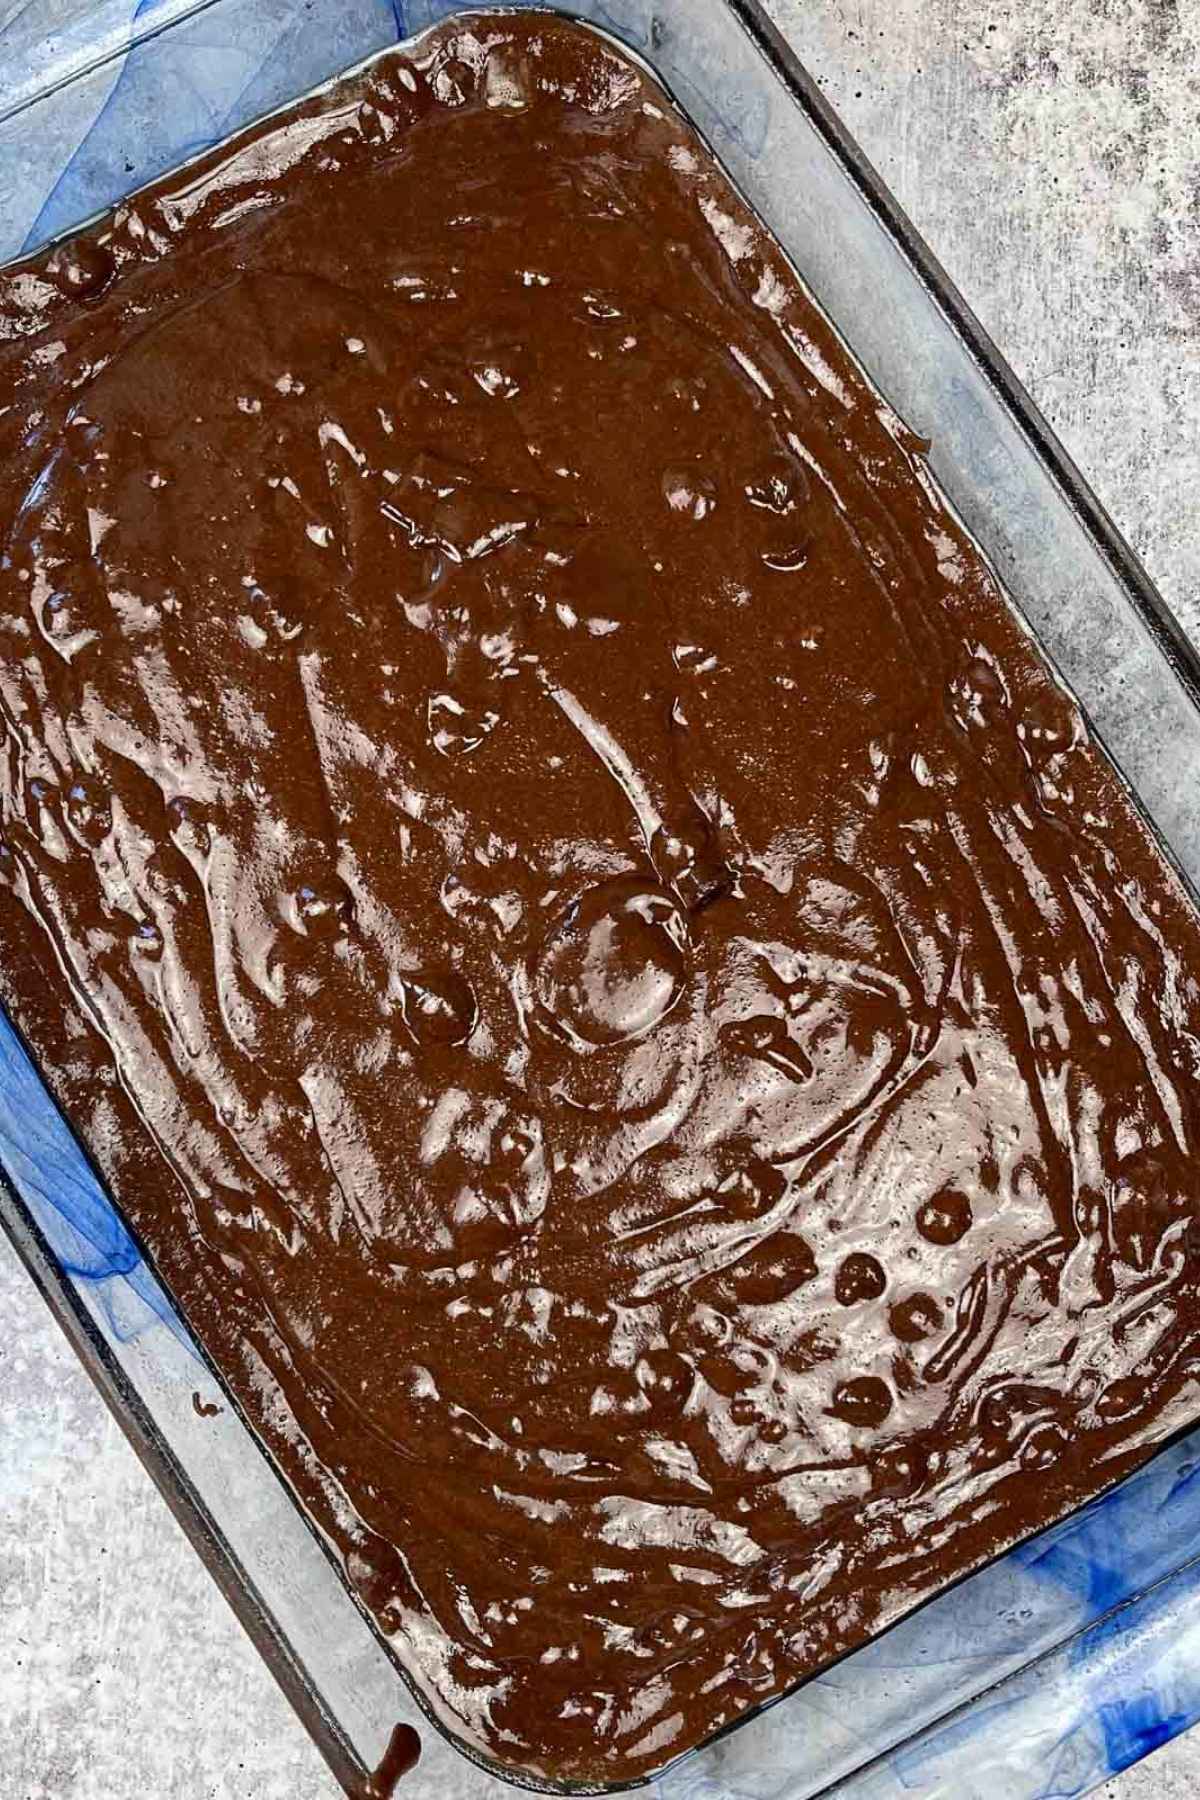 Chocolate Fudge Brownie batter in the baking dish.